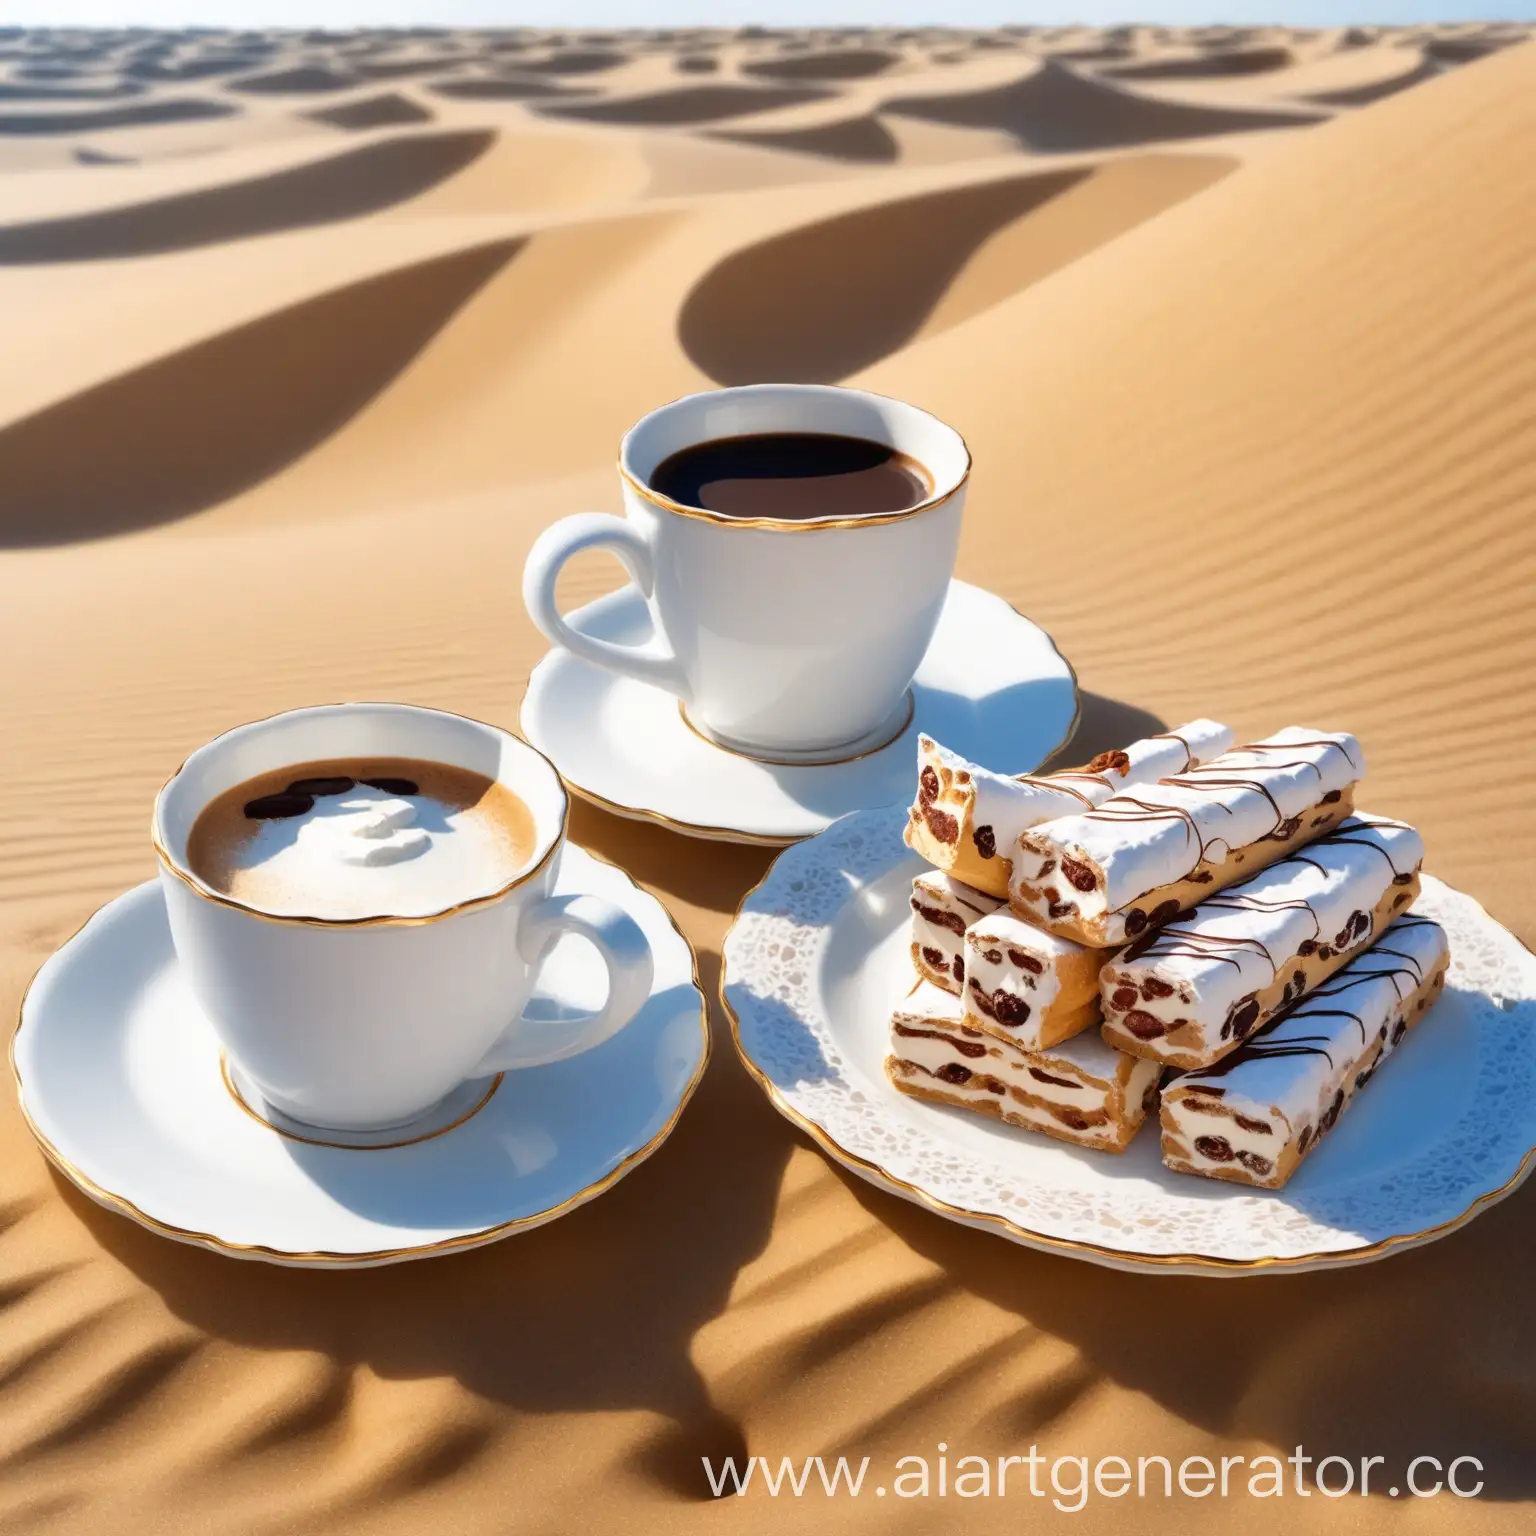 Romantic-Desert-Scene-with-Coffee-and-Torrone